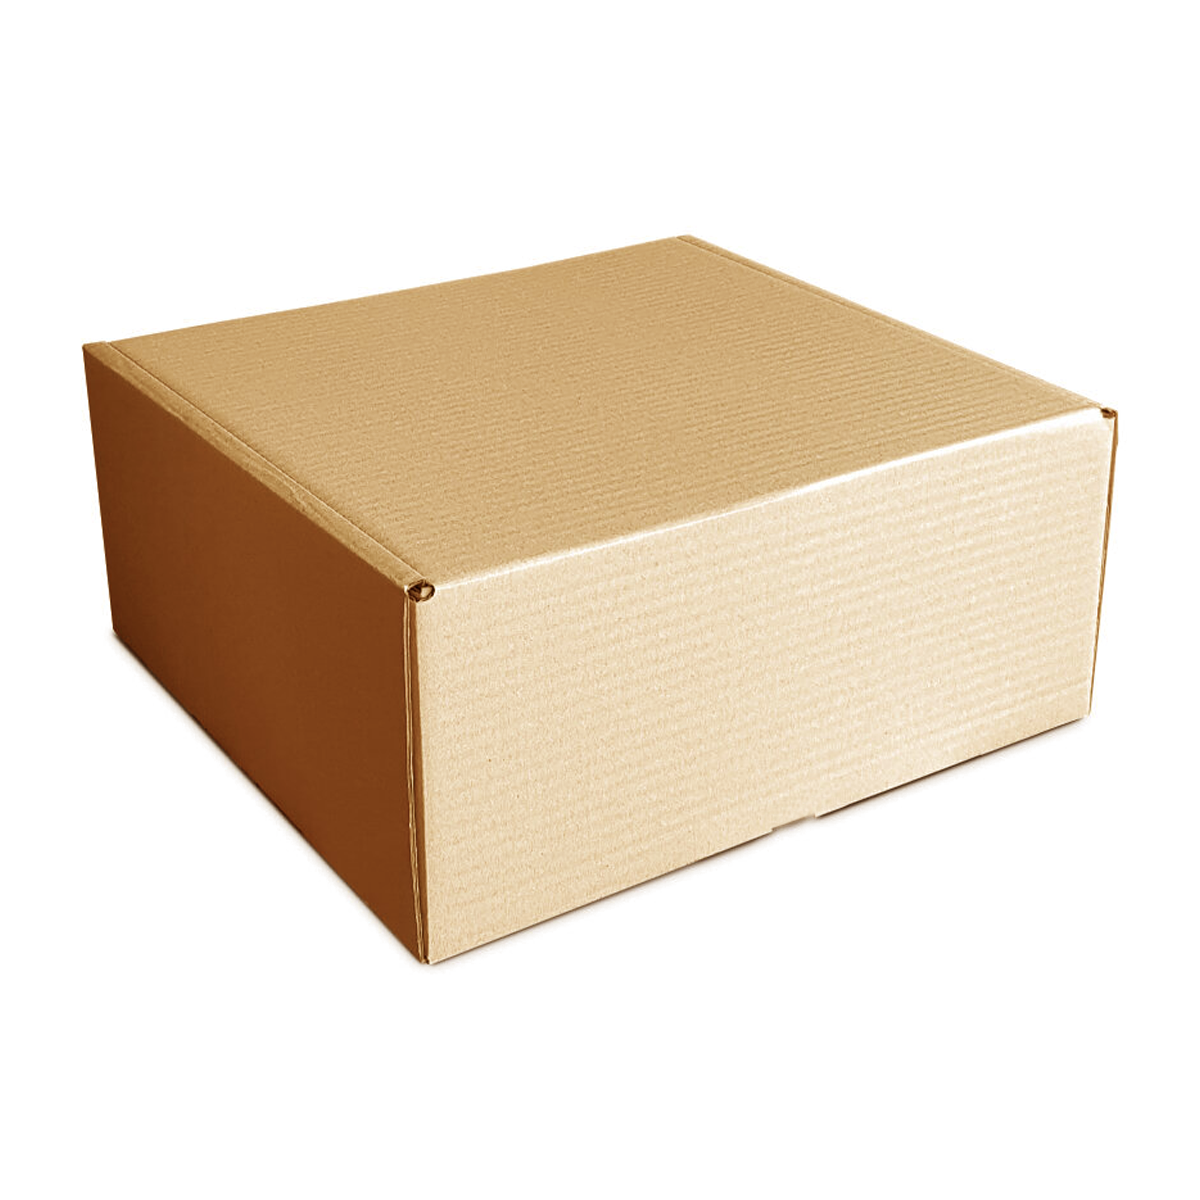 Kraft Brown Corrugated E-Flute Carton Boxes 23.5x17.5x11 Cm (100Pc Pack) - Willow